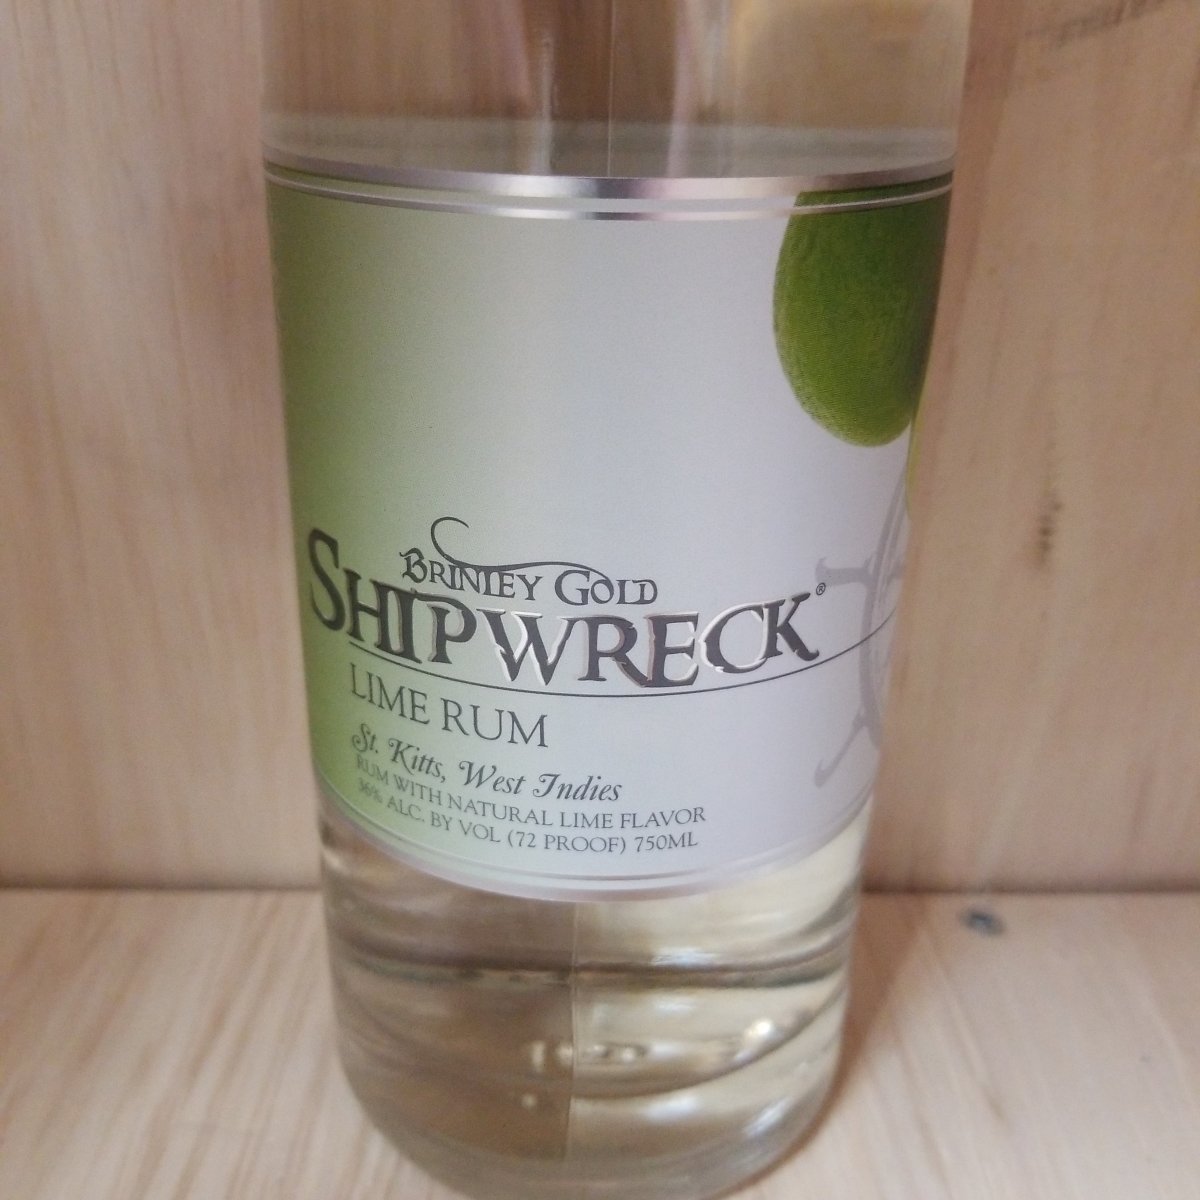 Brinley Gold Shipwreck Lime Rum 750ml - Sip & Say